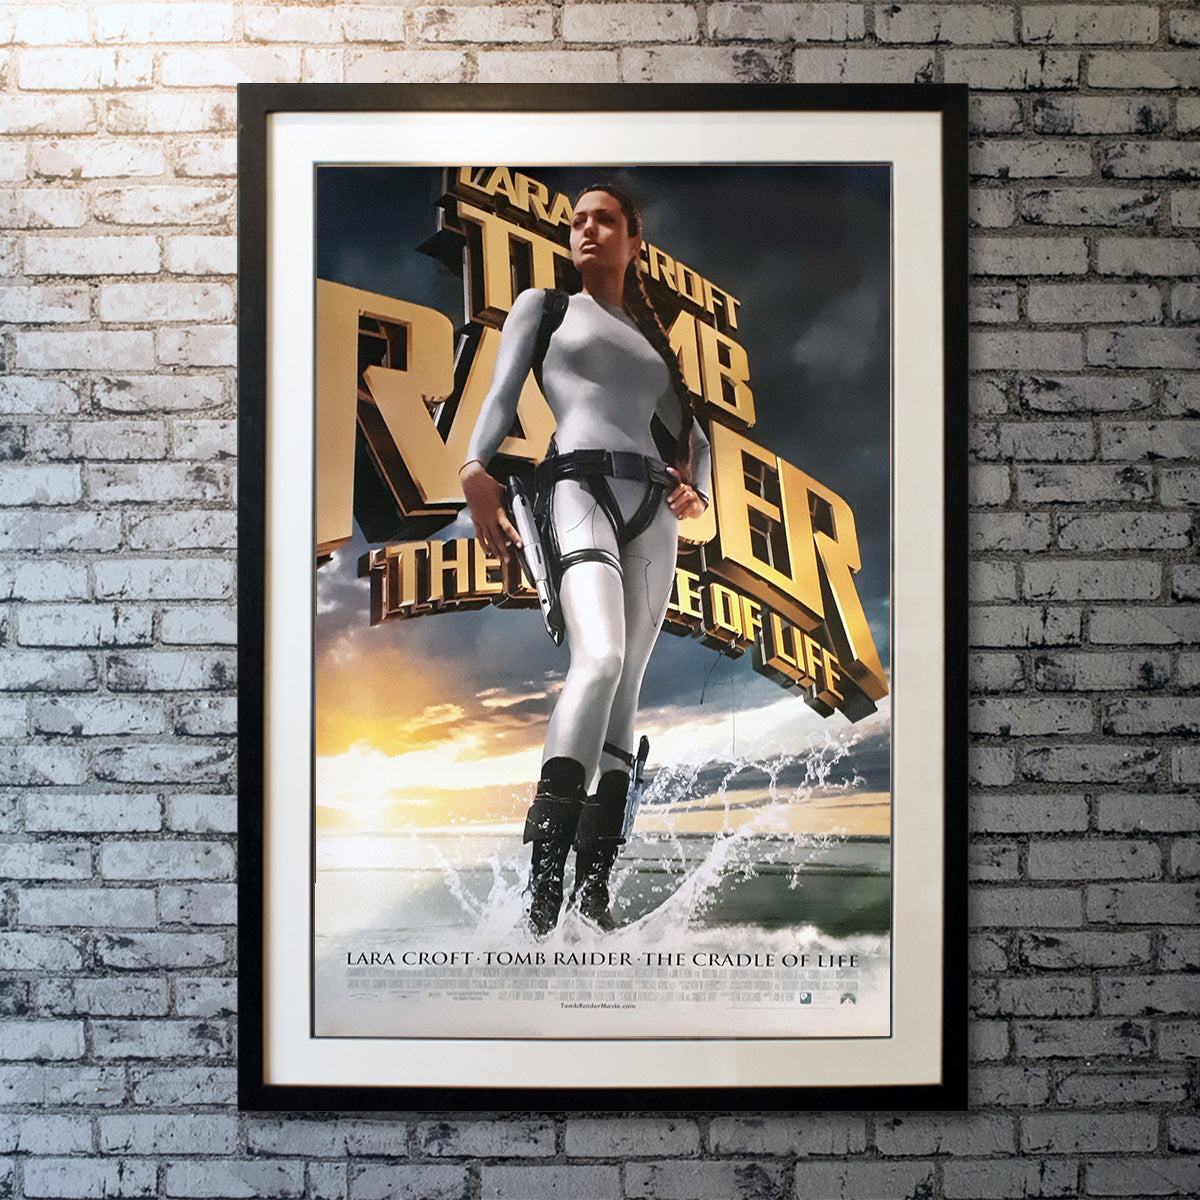 Original Movie Poster of Lara Croft: Tomb Raider (2001) - Signed By Angelina Jolie